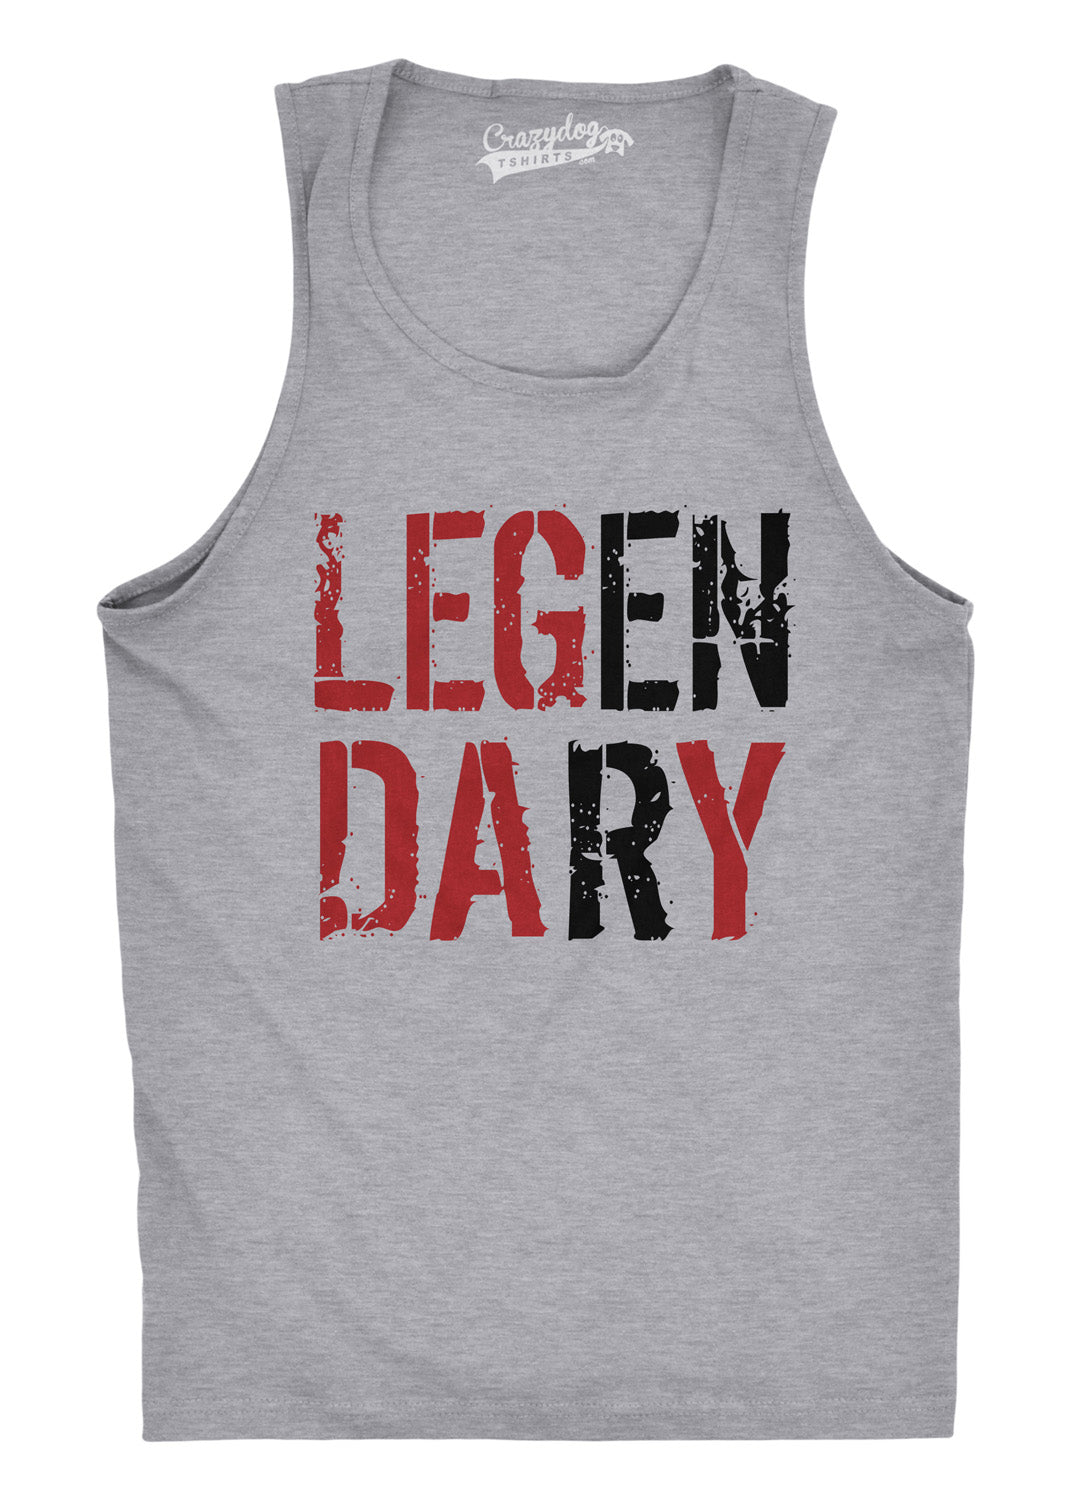 Funny Light Heather Grey - Leg Day Legendary Leg Day Mens Tank Top Nerdy Fitness Tee